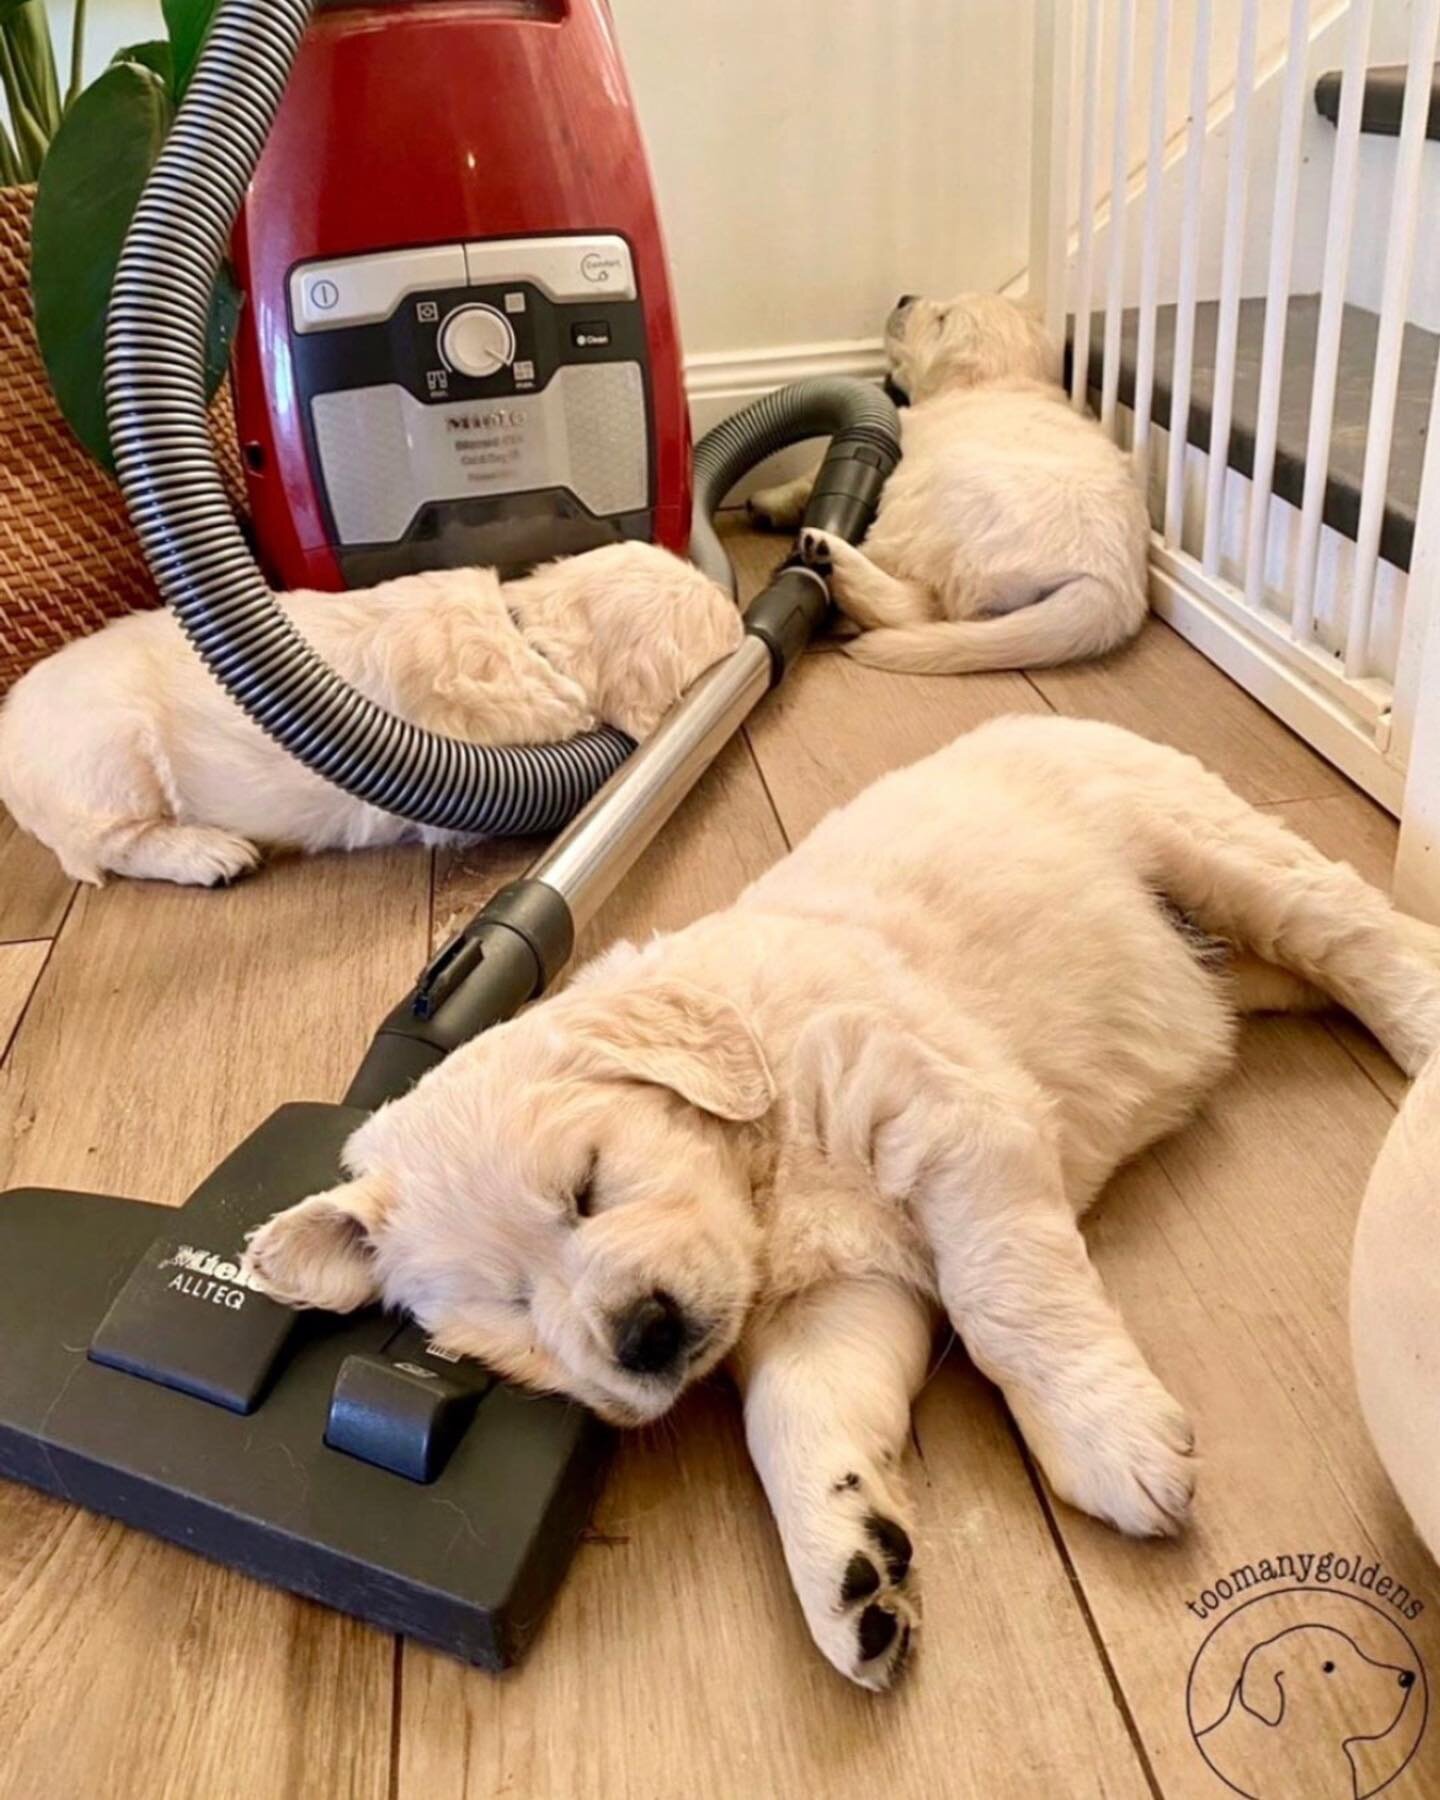 Vacuuming is &lsquo;ruff&rsquo; work. (dog emoji) @toomanygoldens